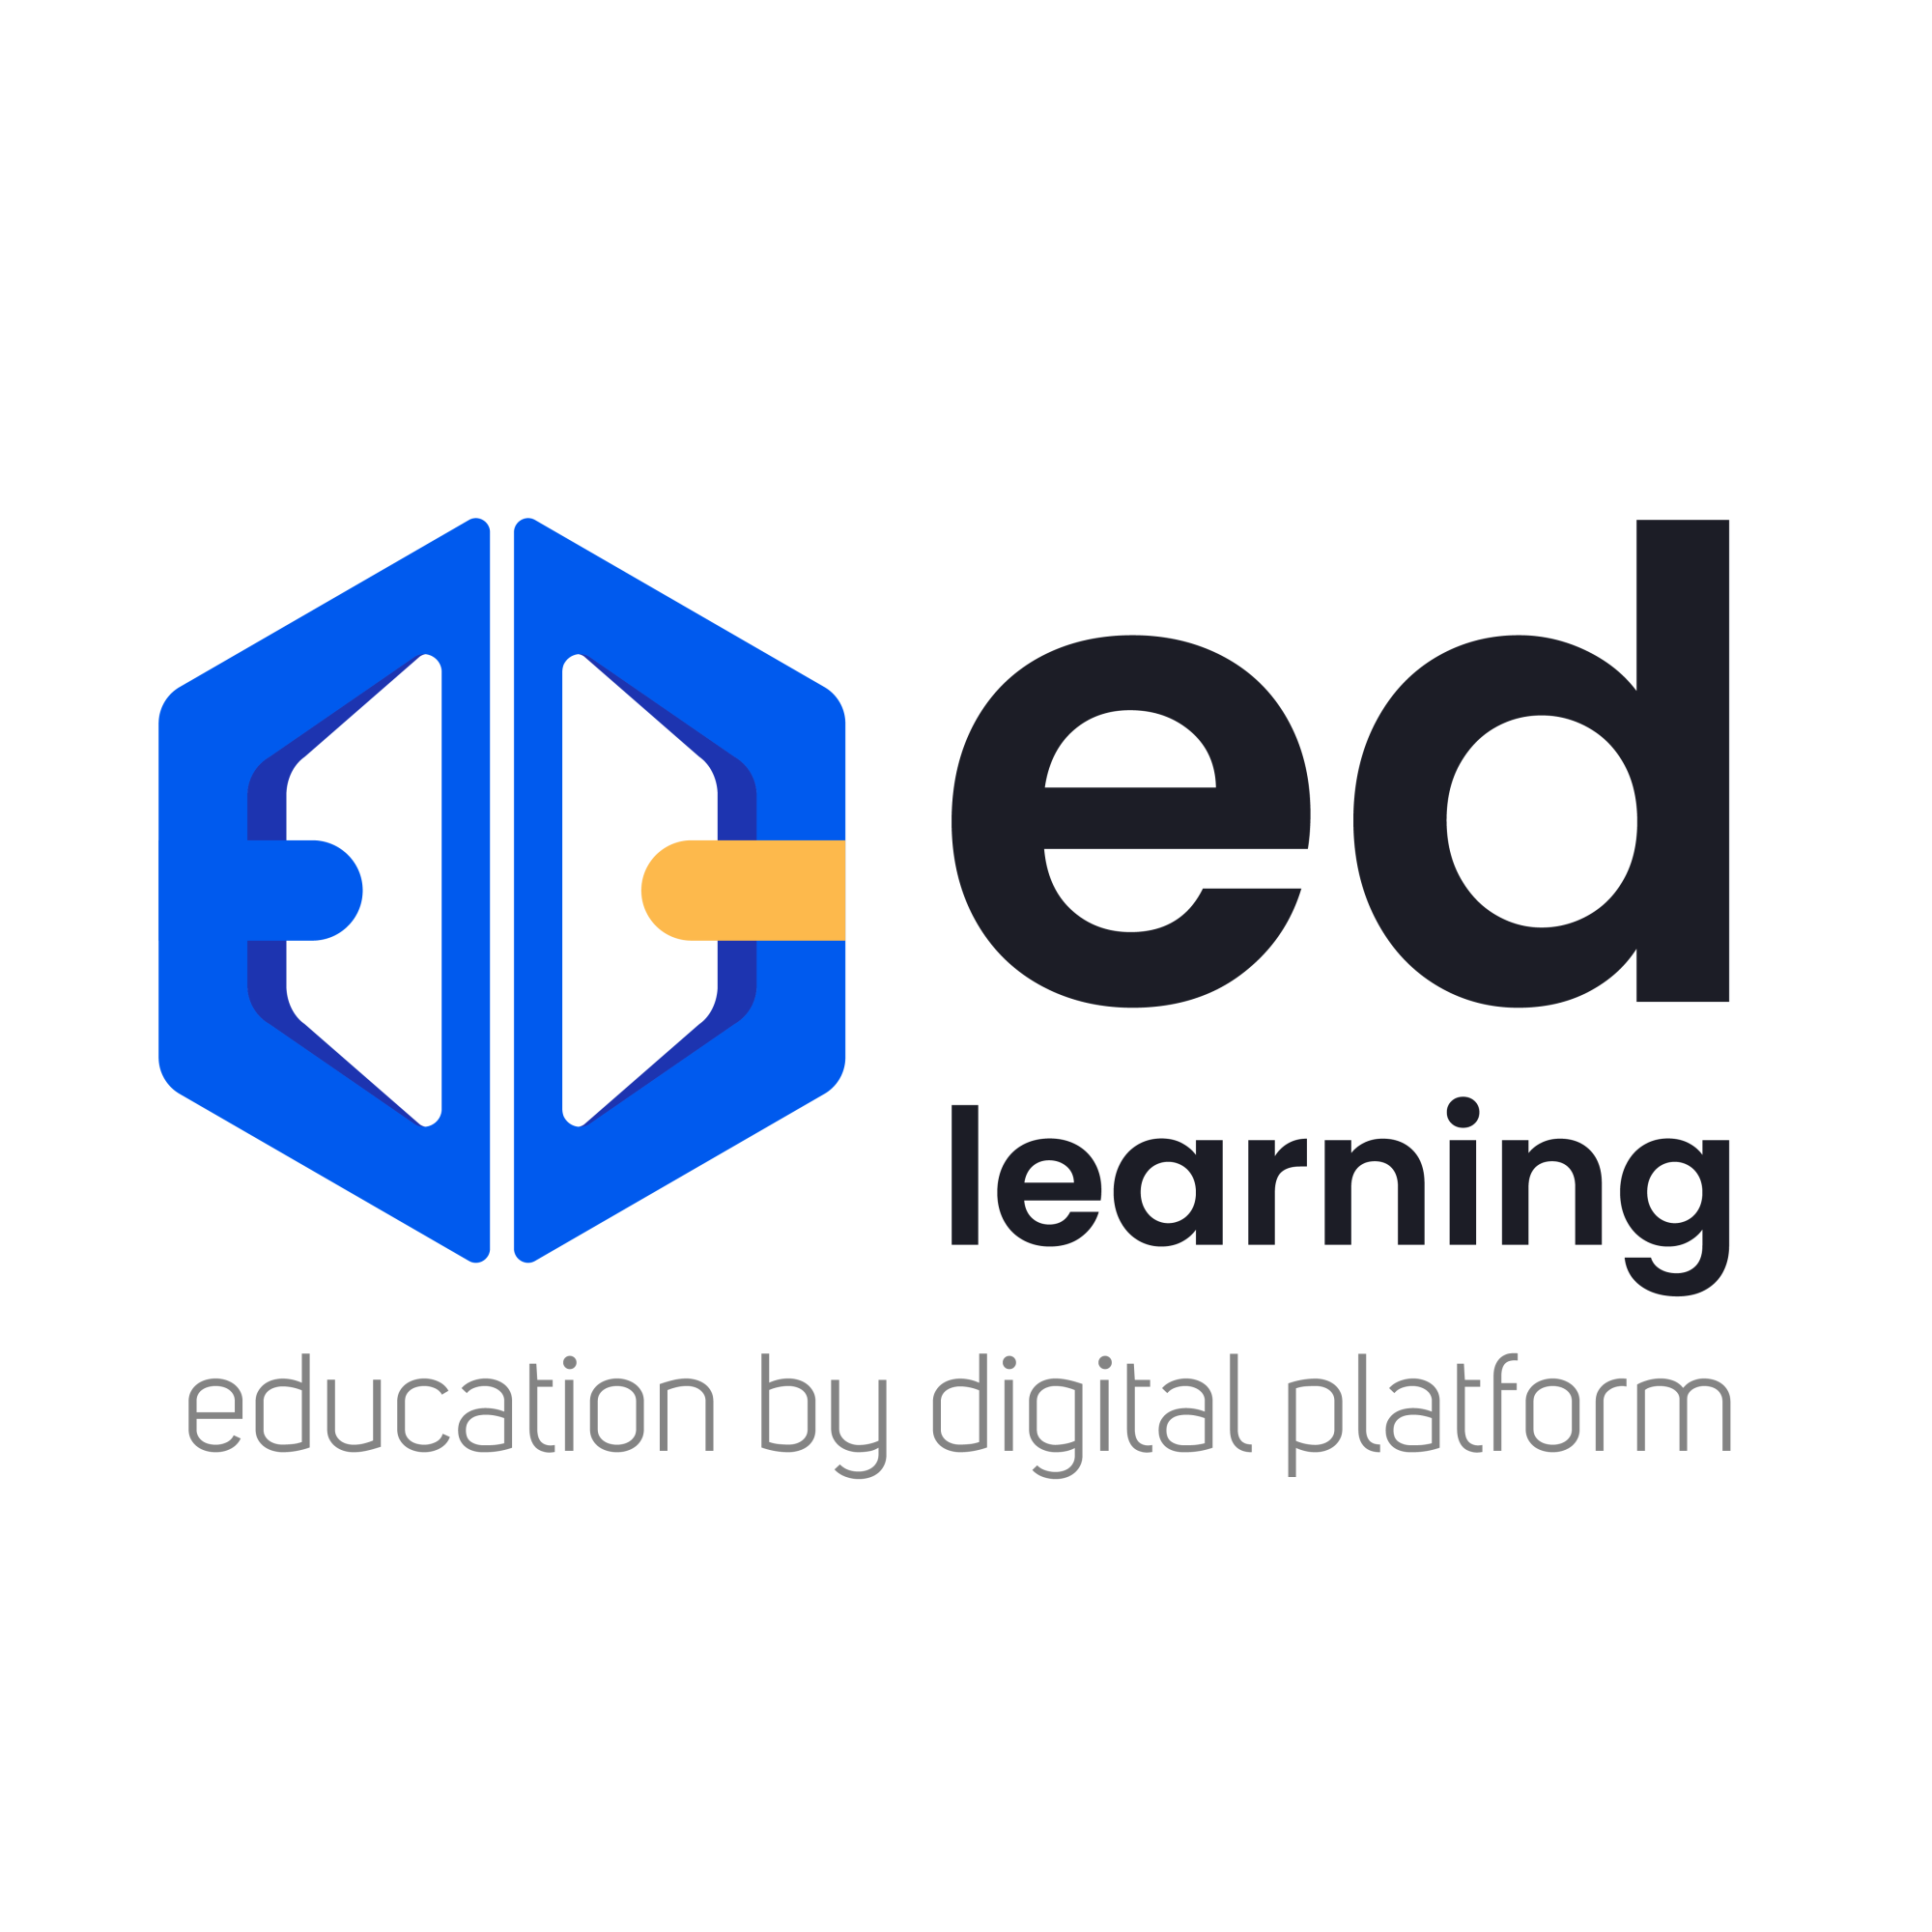 ED-Learning